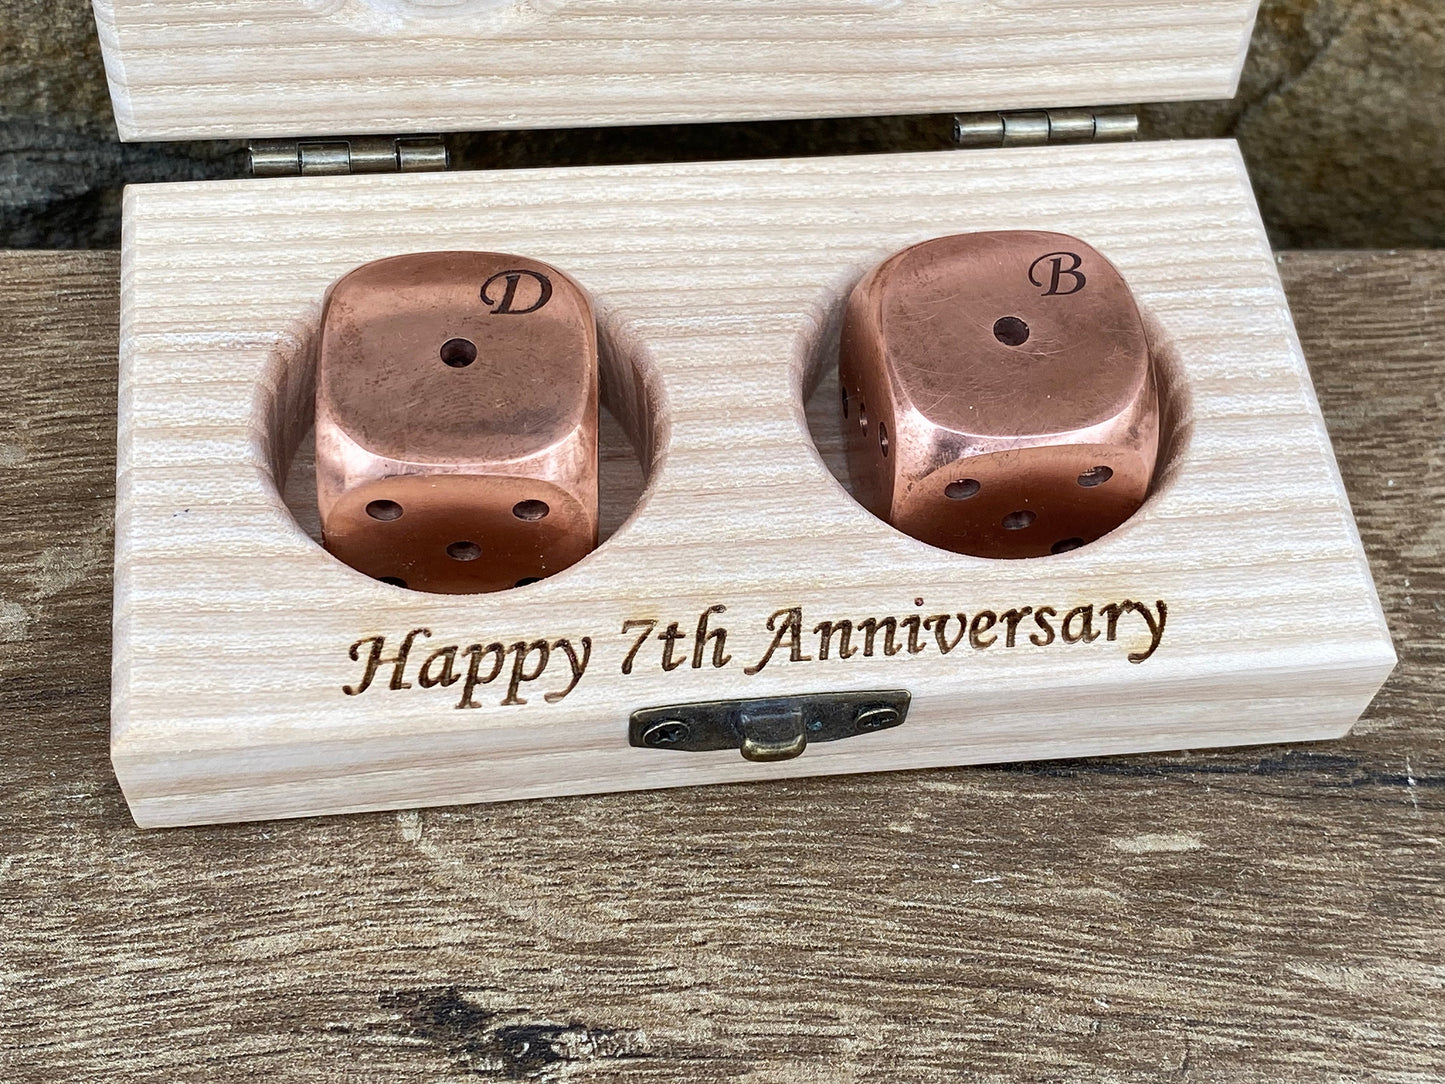 Copper dices, 7th anniversary, copper anniversary, leasure, dice box, personalized gift, dice game, tabletop game, board games, copper gift